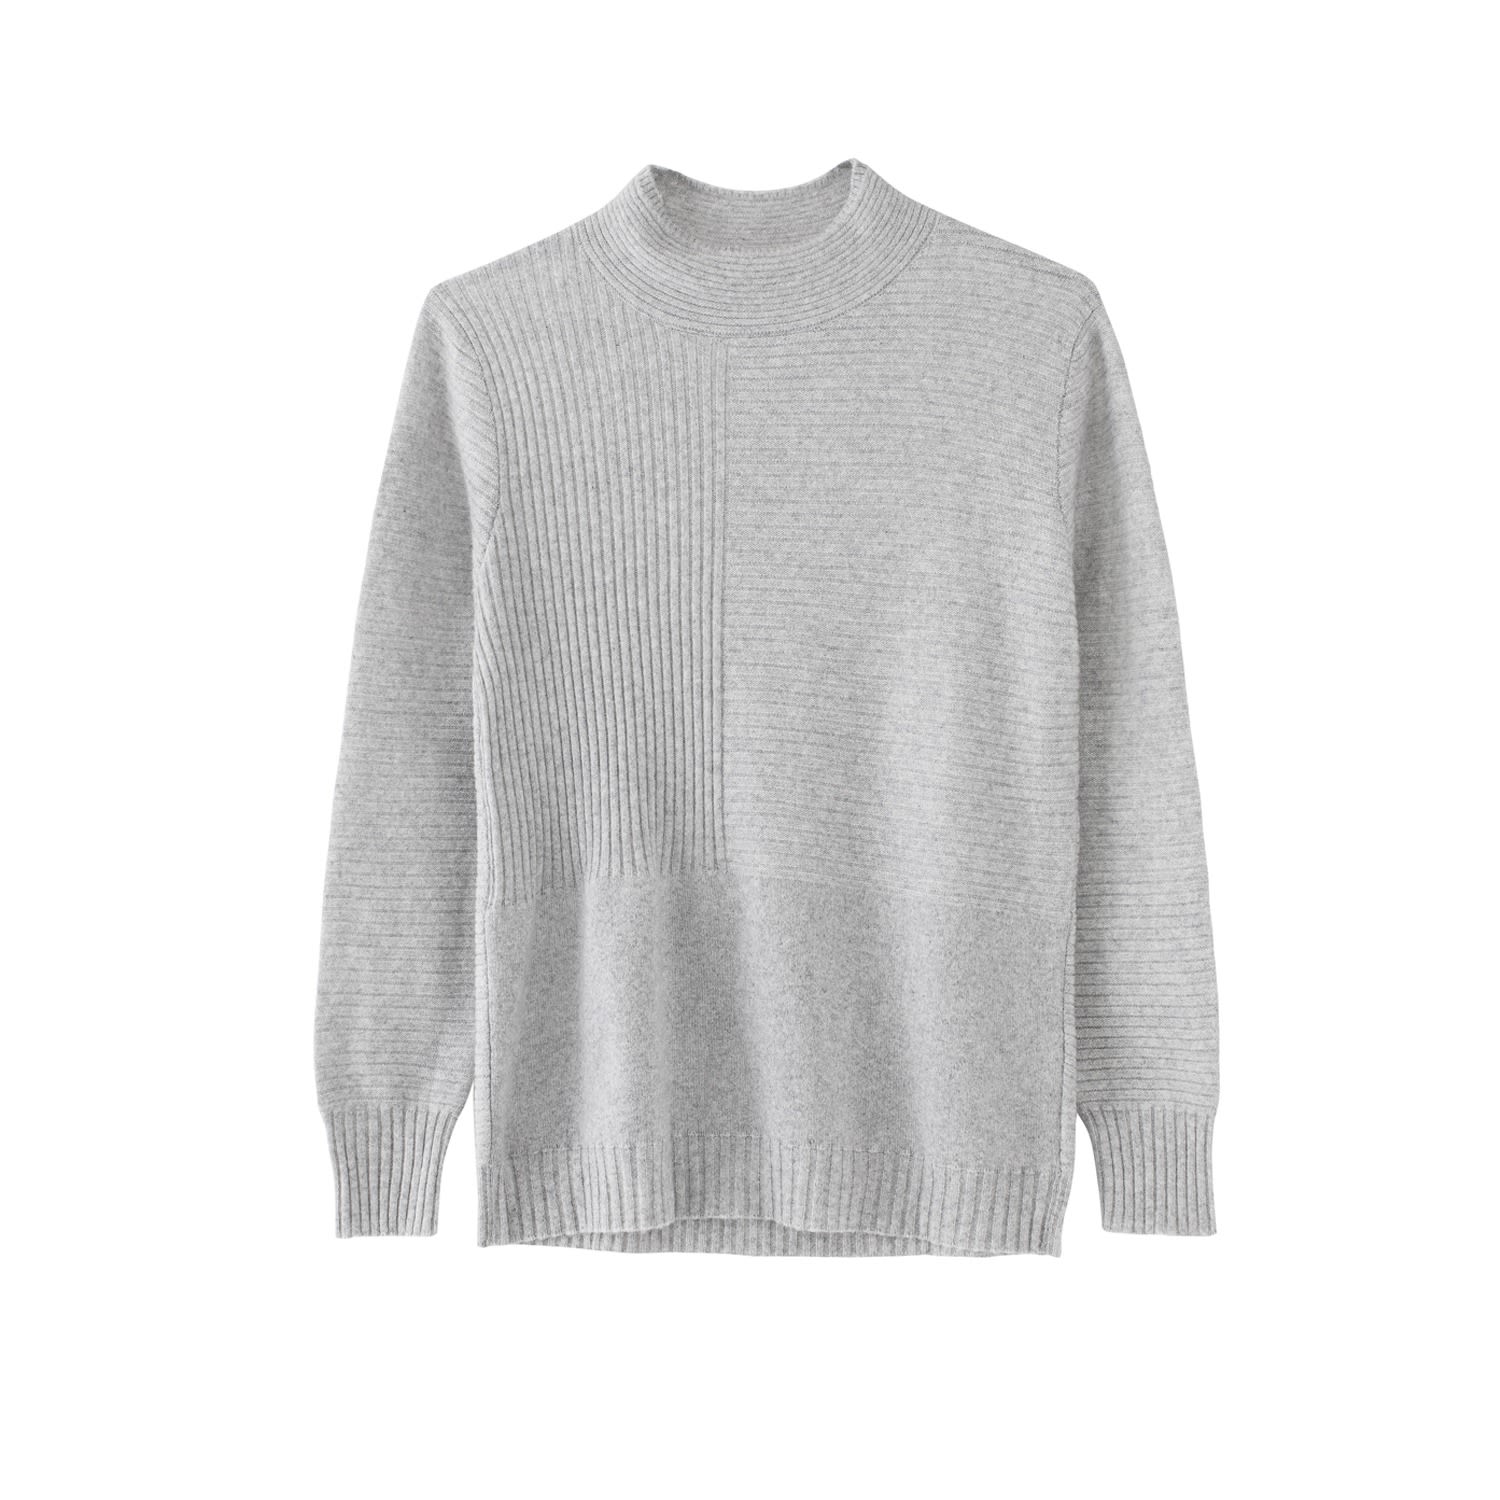 Women’s Grey Knitted Turtleneck Cashmere Jumper Small Voya